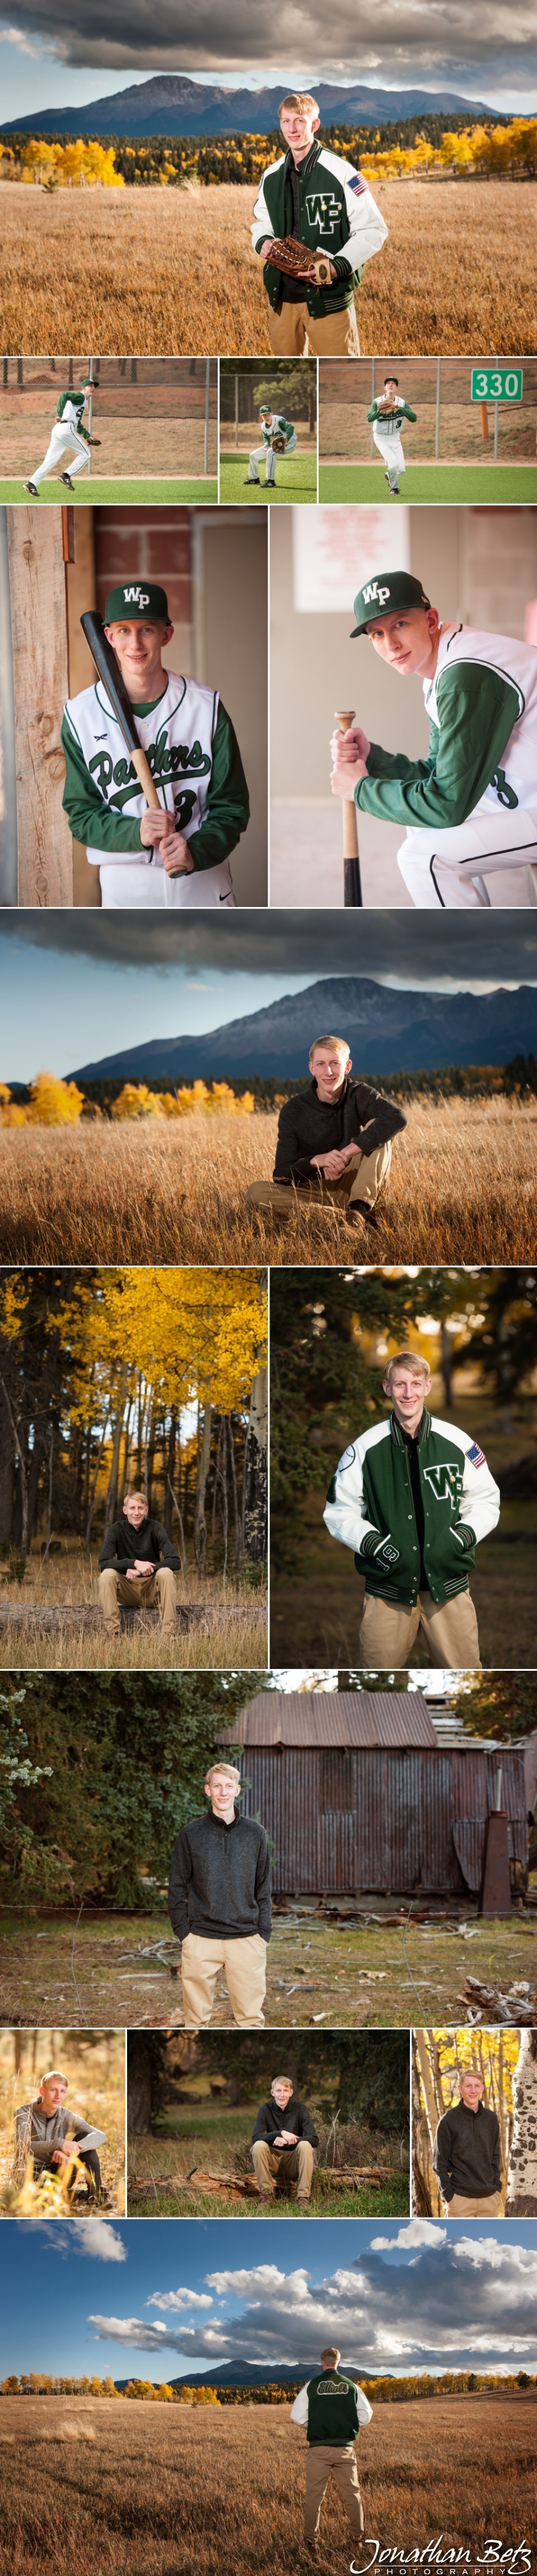 Woodland Park High School Senior Pictures Jonathan Betz Photography Colorado Springs Senior Photographer 1